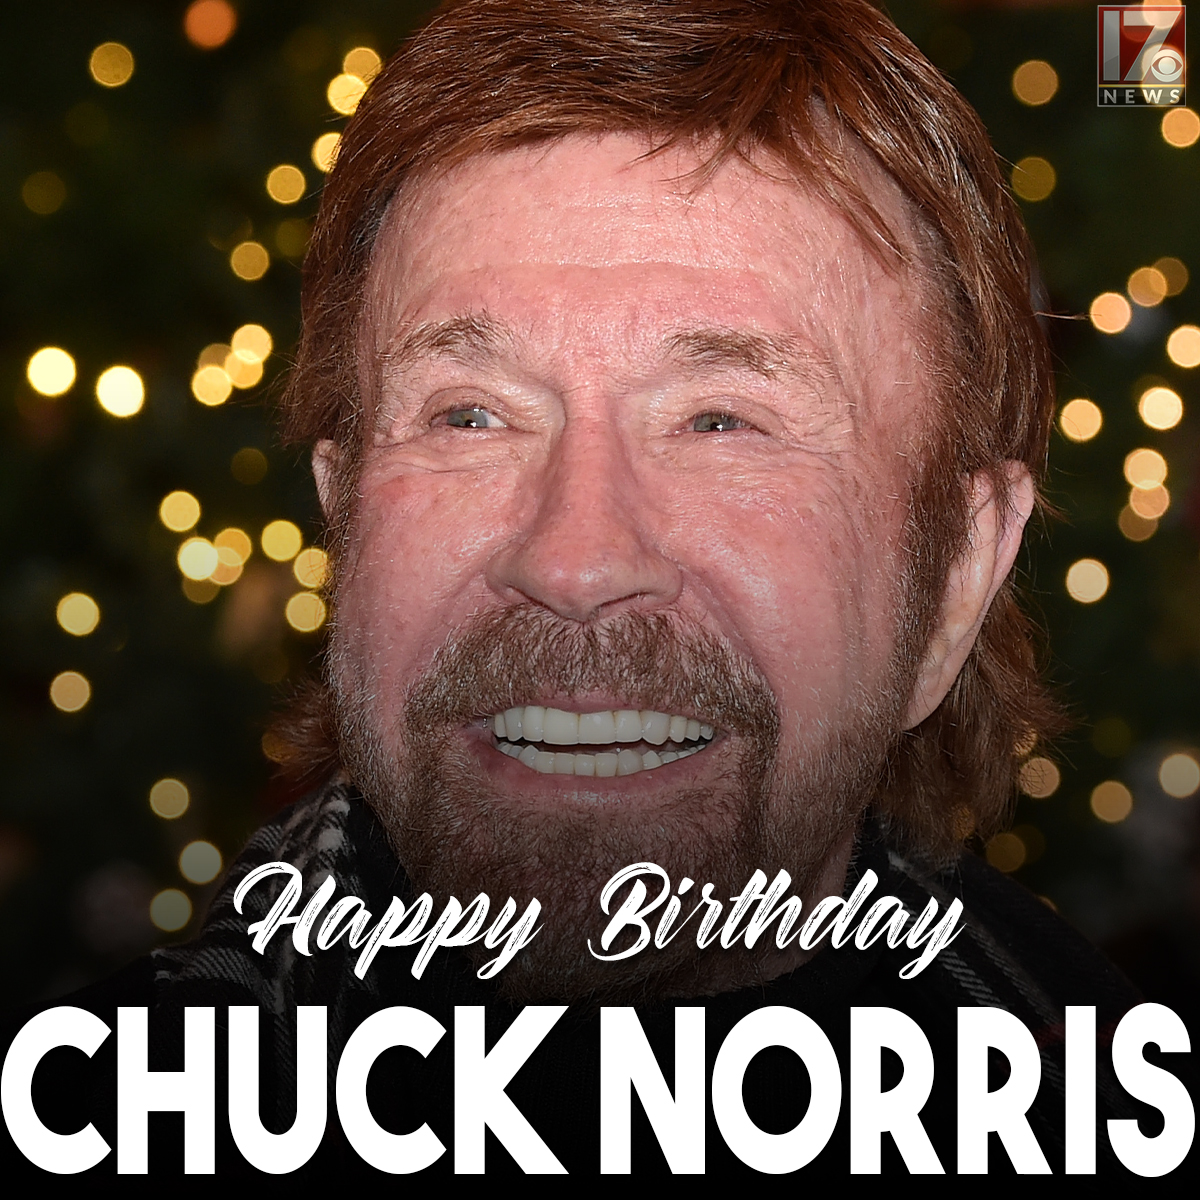 Dear birthday, Happy Chuck Norris!

Everyone wish Chuck Norris a happy 80th birthday!  